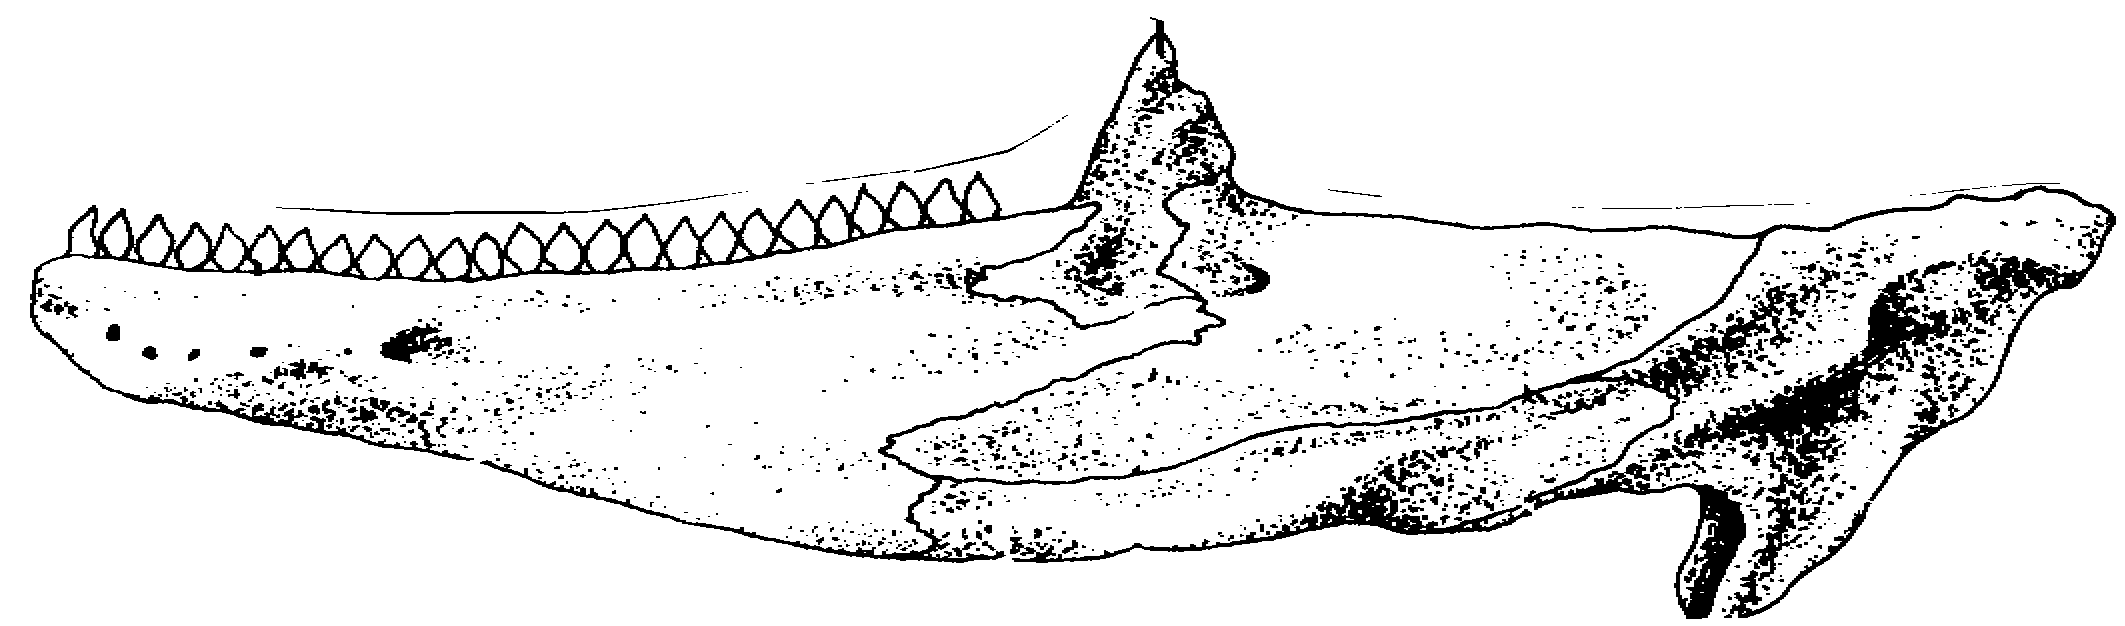 Drawing of green iguana jawbone with teeth.